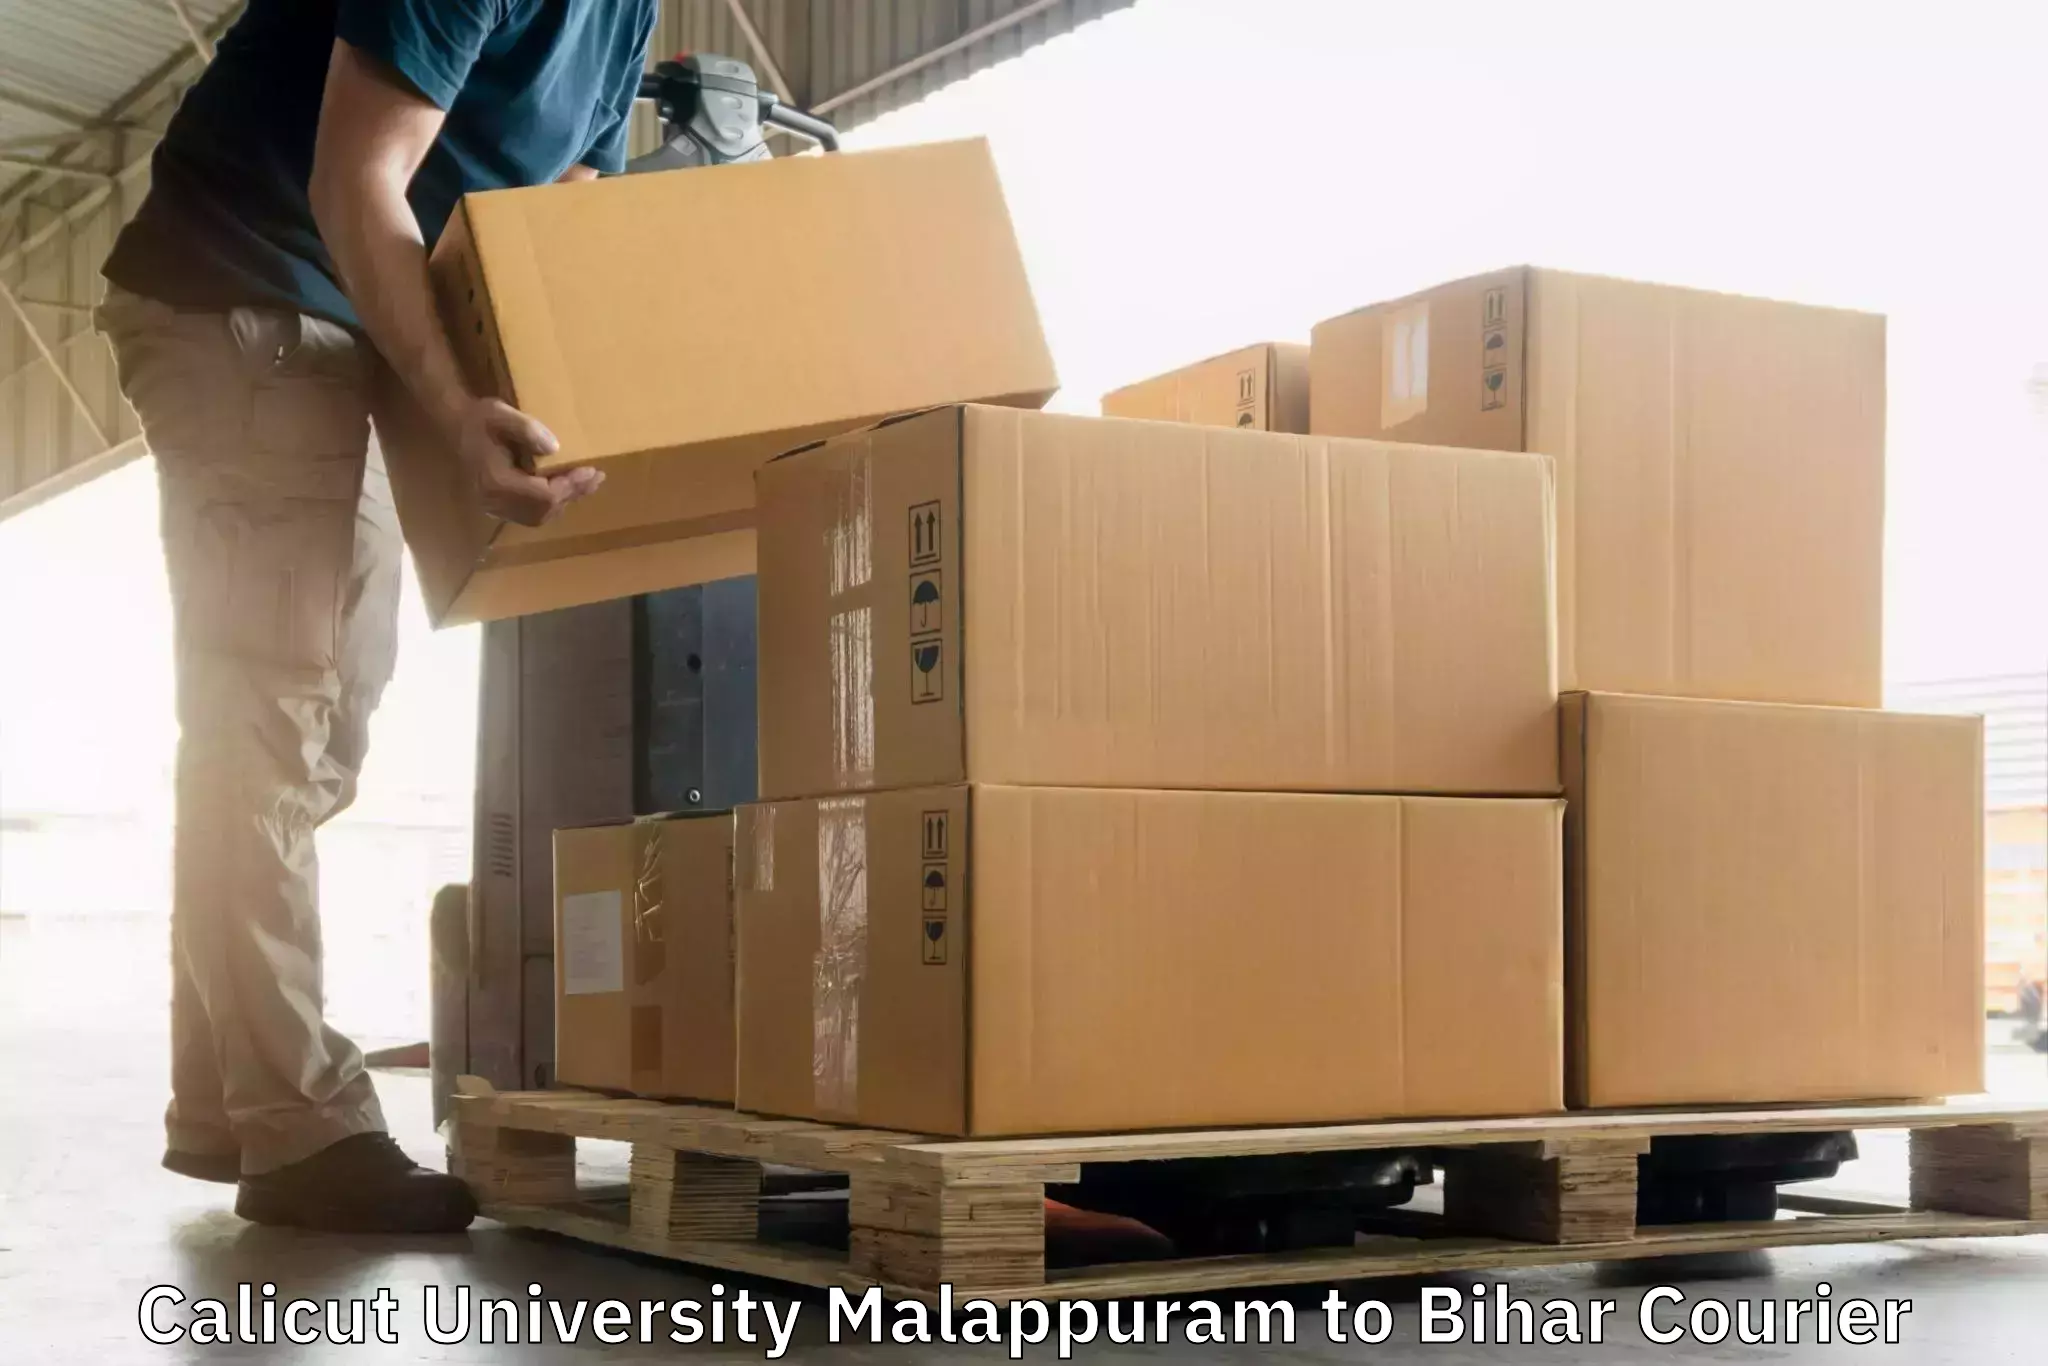 Multi-national courier services Calicut University Malappuram to Malyabag